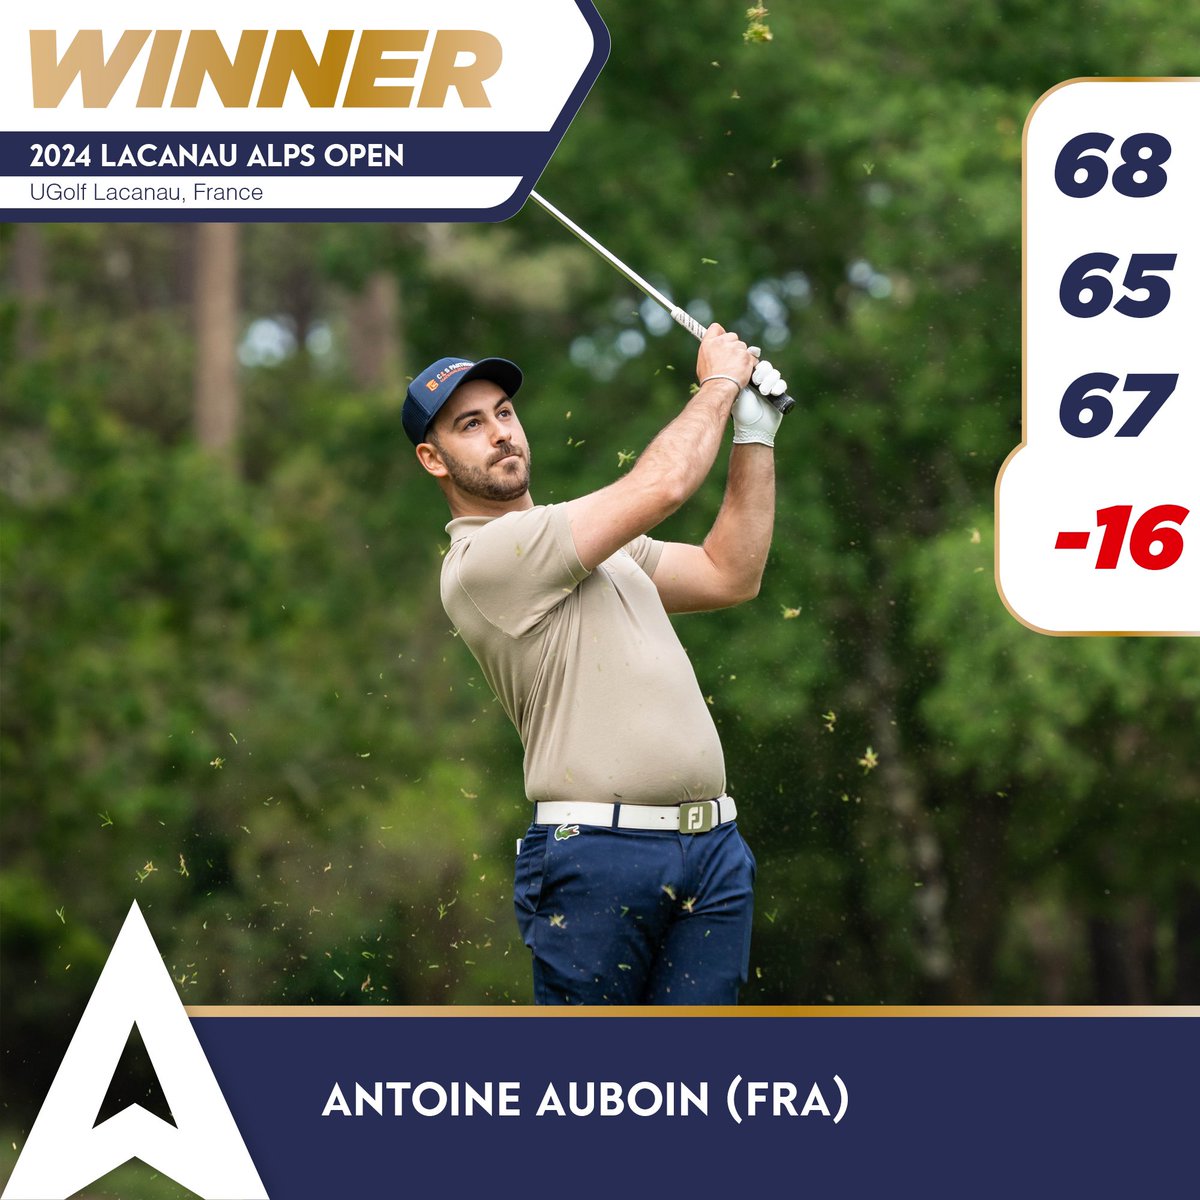 🇫🇷Antoine Auboin wins🏆 the inaugural 🇫🇷 ⛳️ 2024 Lacanau Alps Open with a total score of 16 under-par. 📸- Alps Tour Golf / Federico Capretti #2024AlpsTourSeason #raisinggolfstars #risinggolfstars